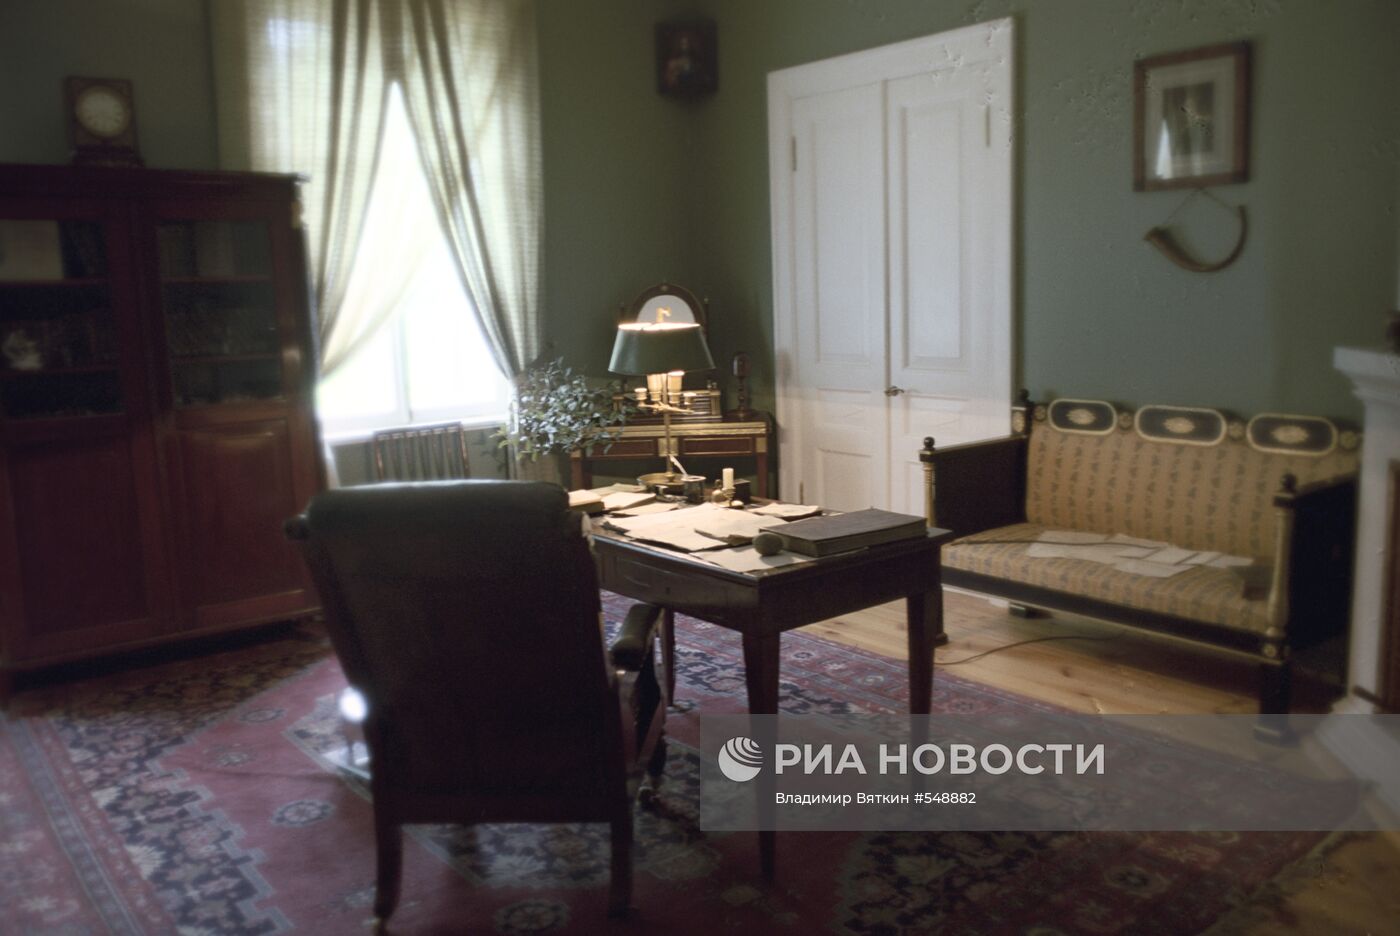 Кабинет А.С. Пушкина в доме поэта